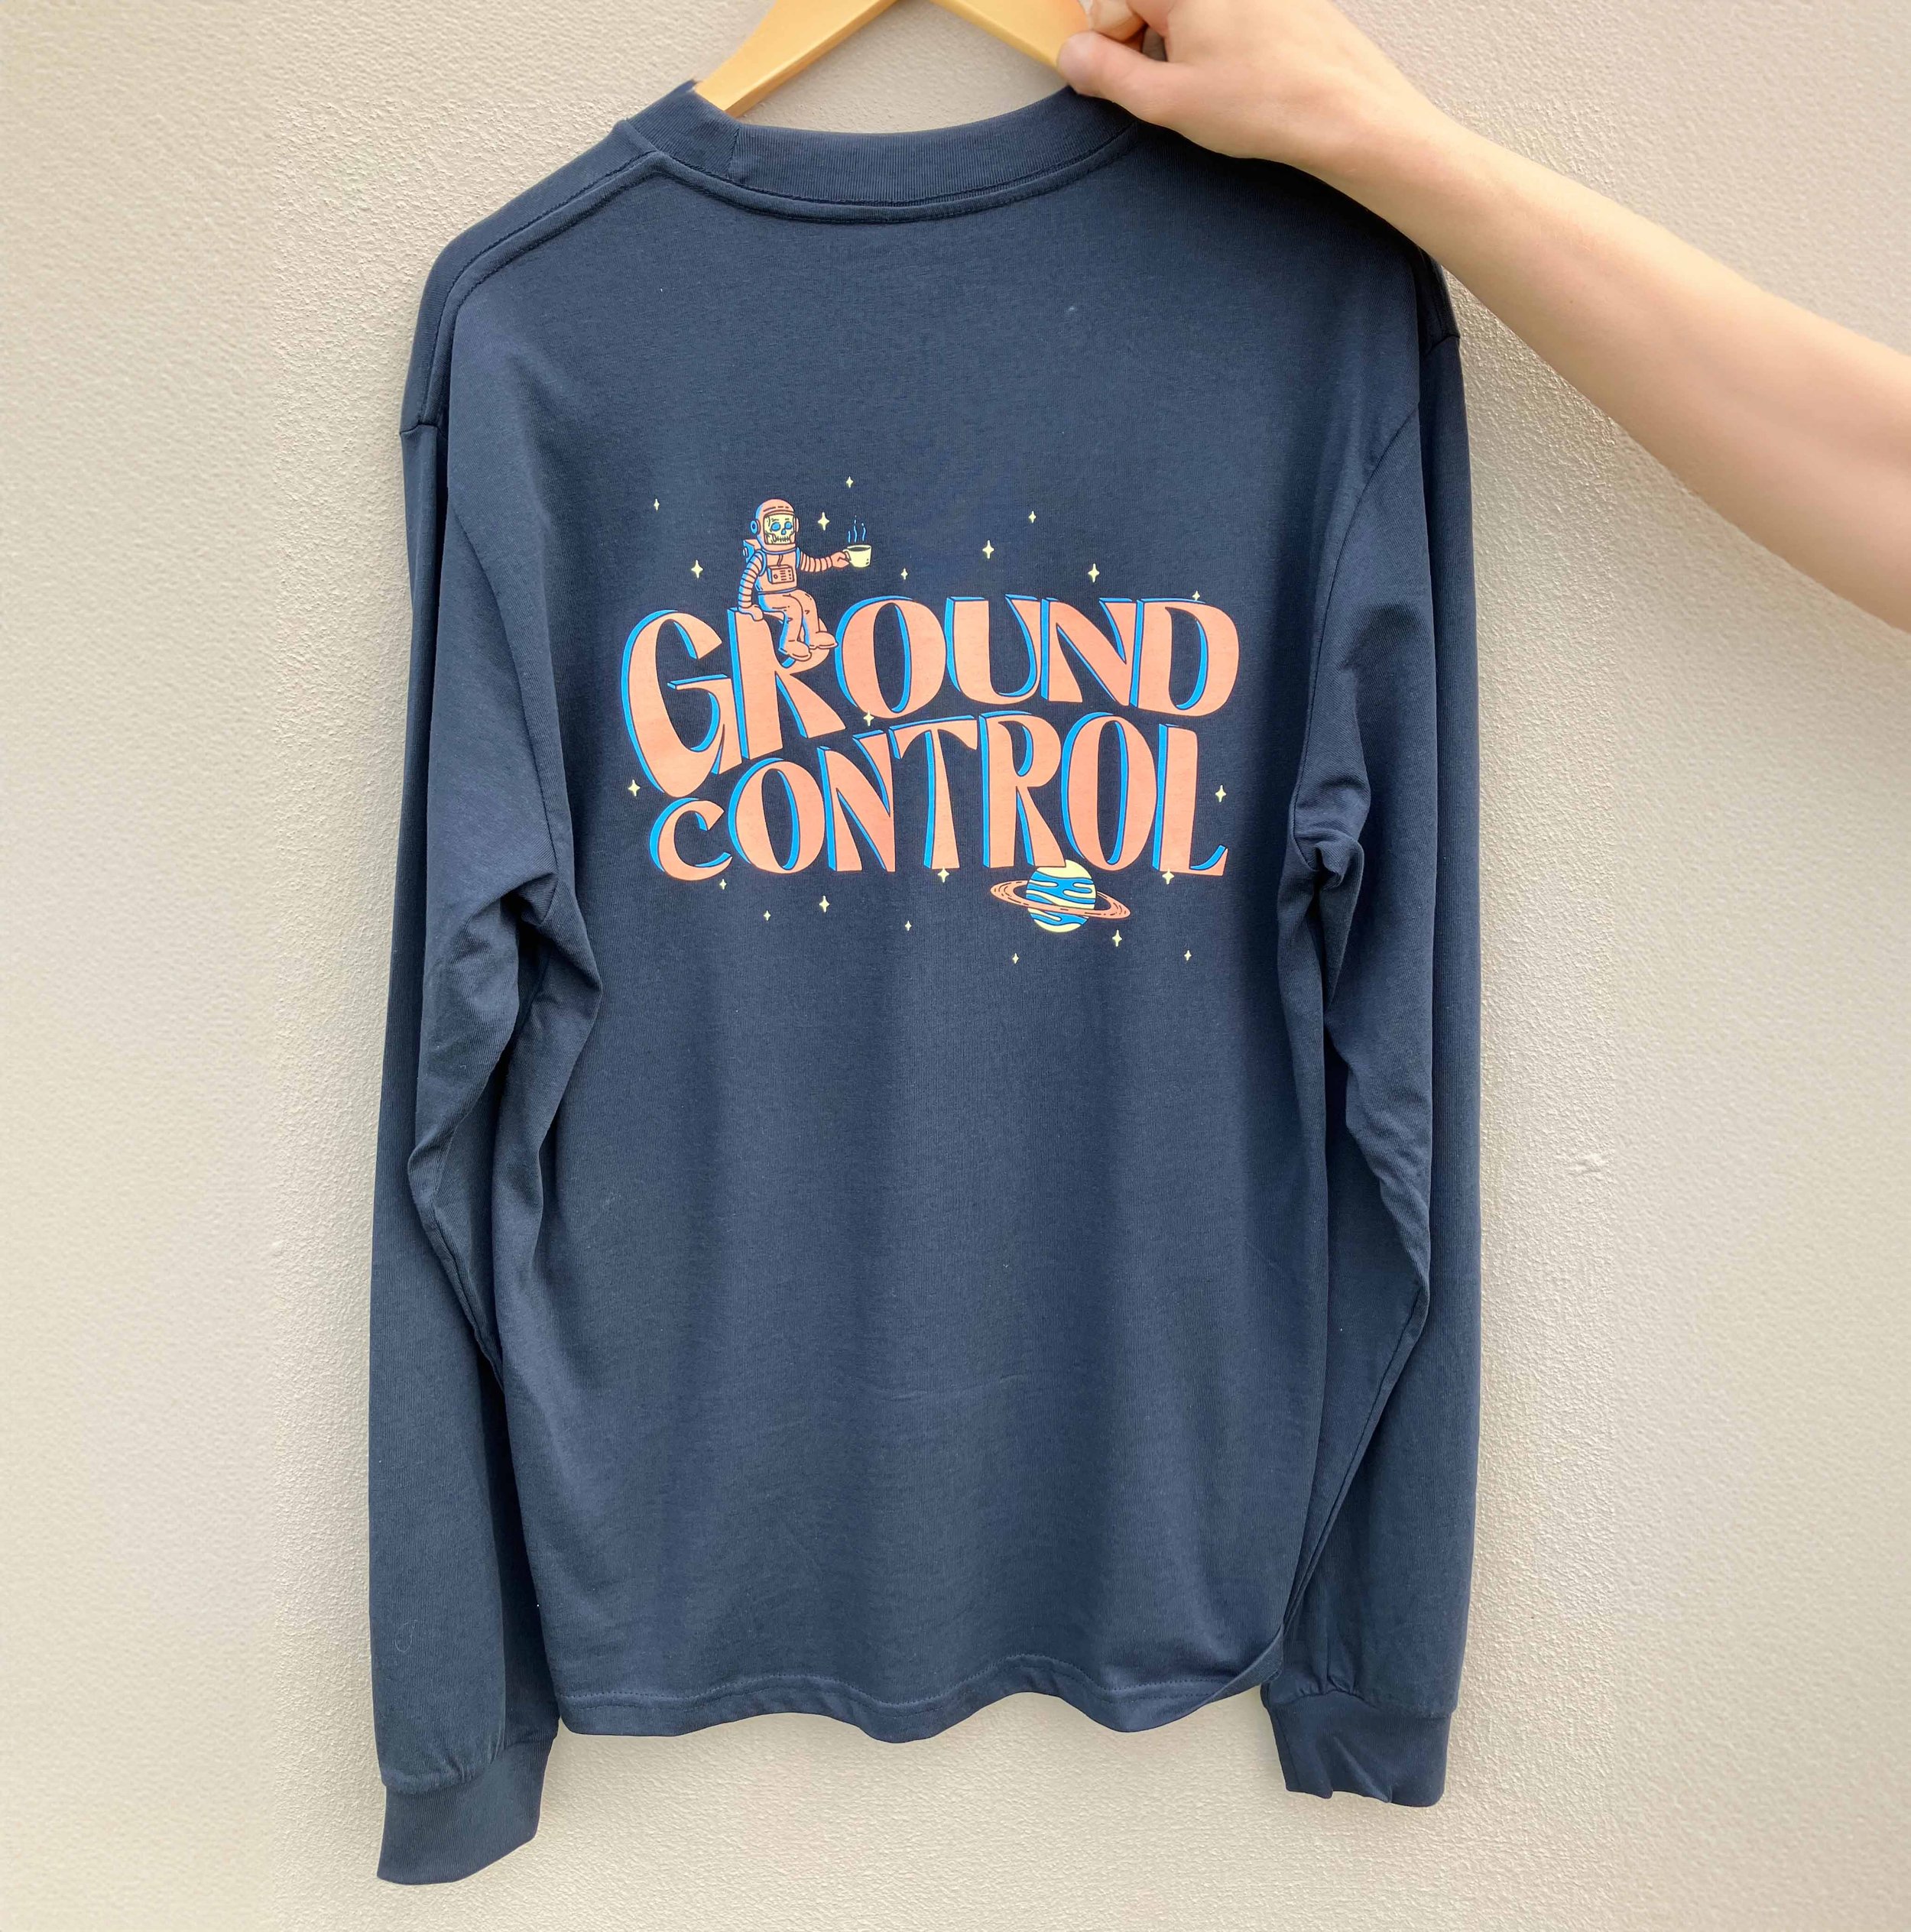 Ground Control shirt.jpg